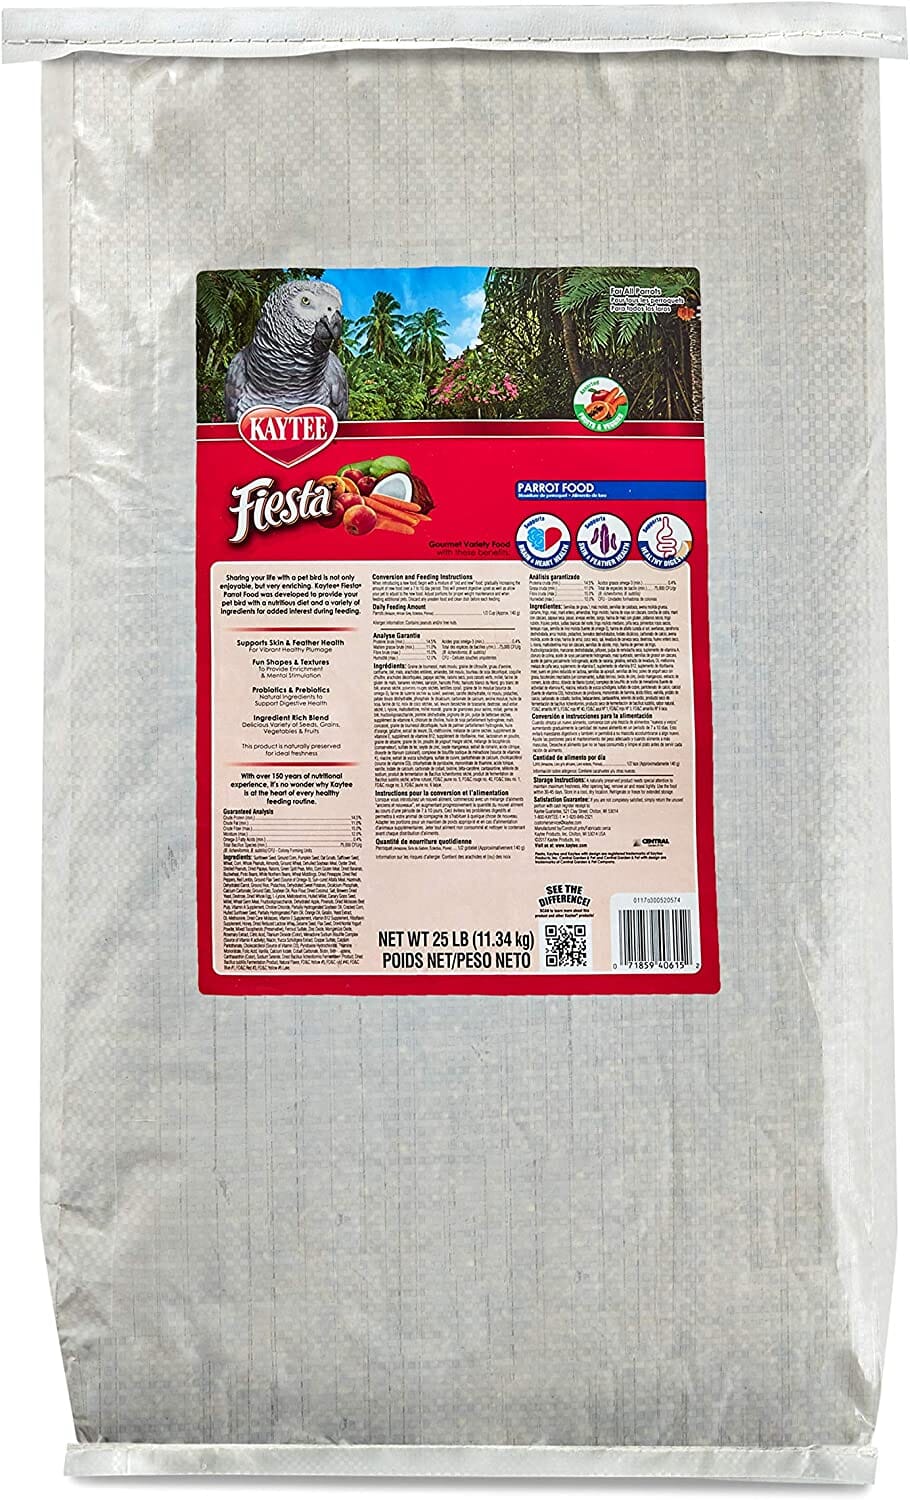 Kaytee Fiesta Parrot Food - 25 lb Bag  